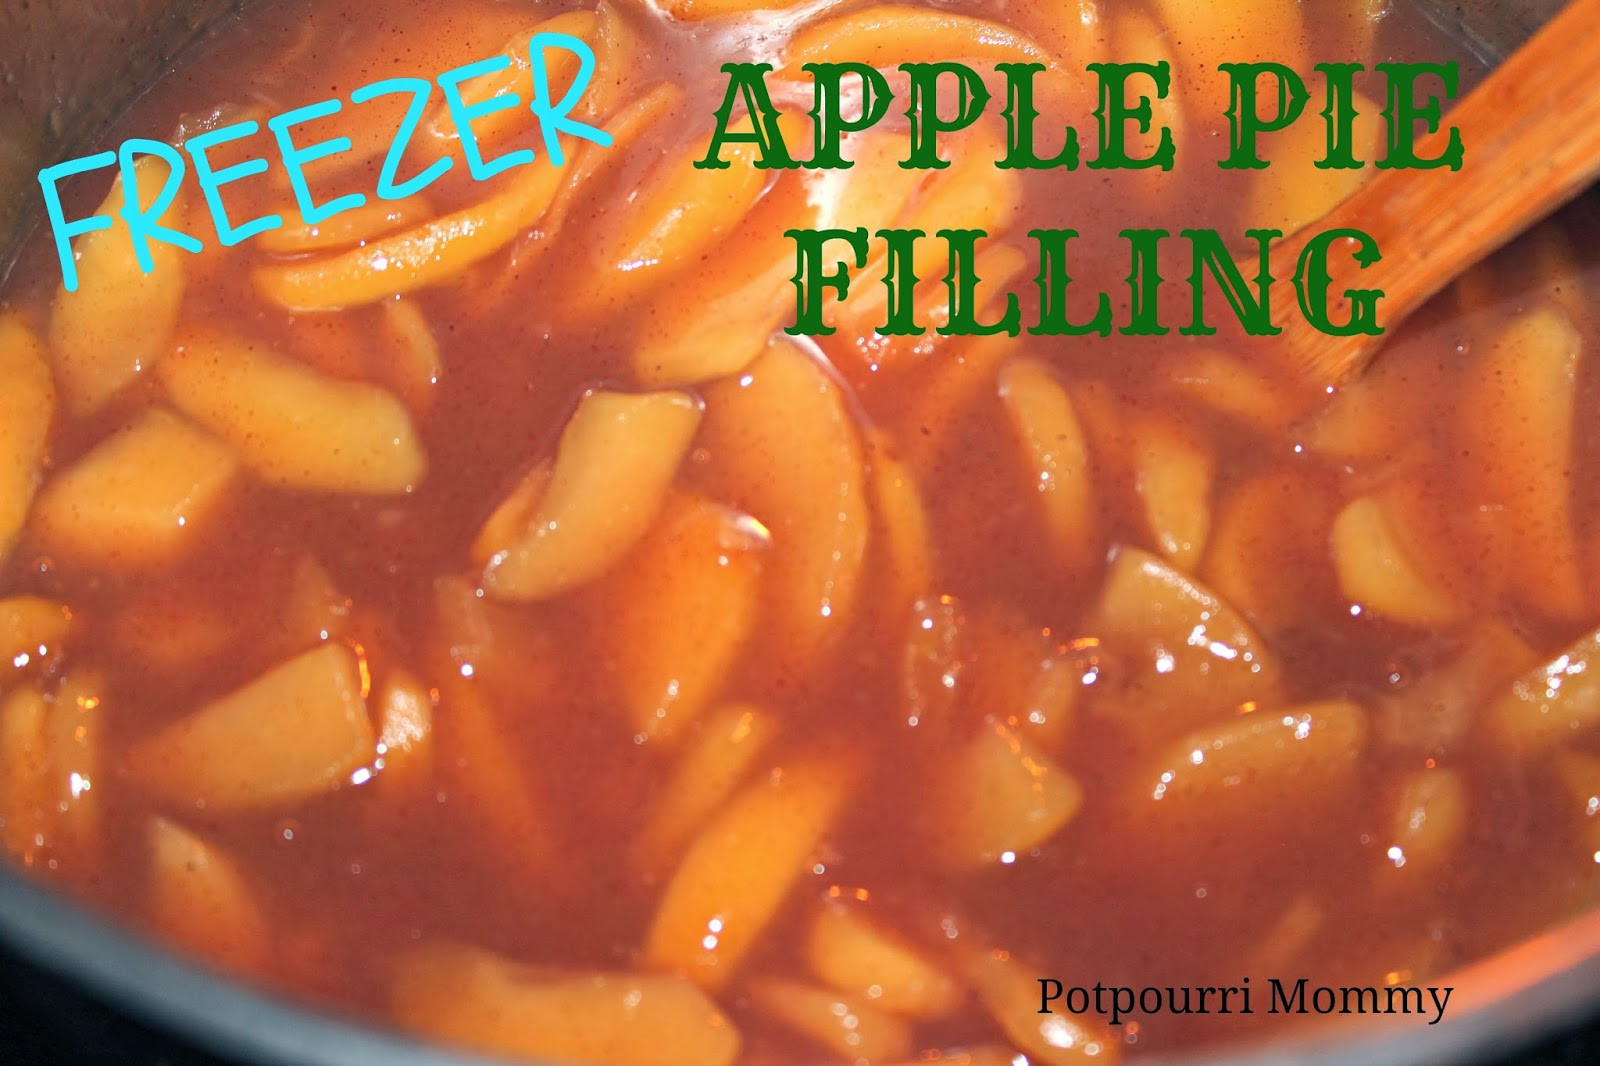 Apple Pie Filling For Freezer
 Potpourri Mommy Freezer Apple Pie Filling